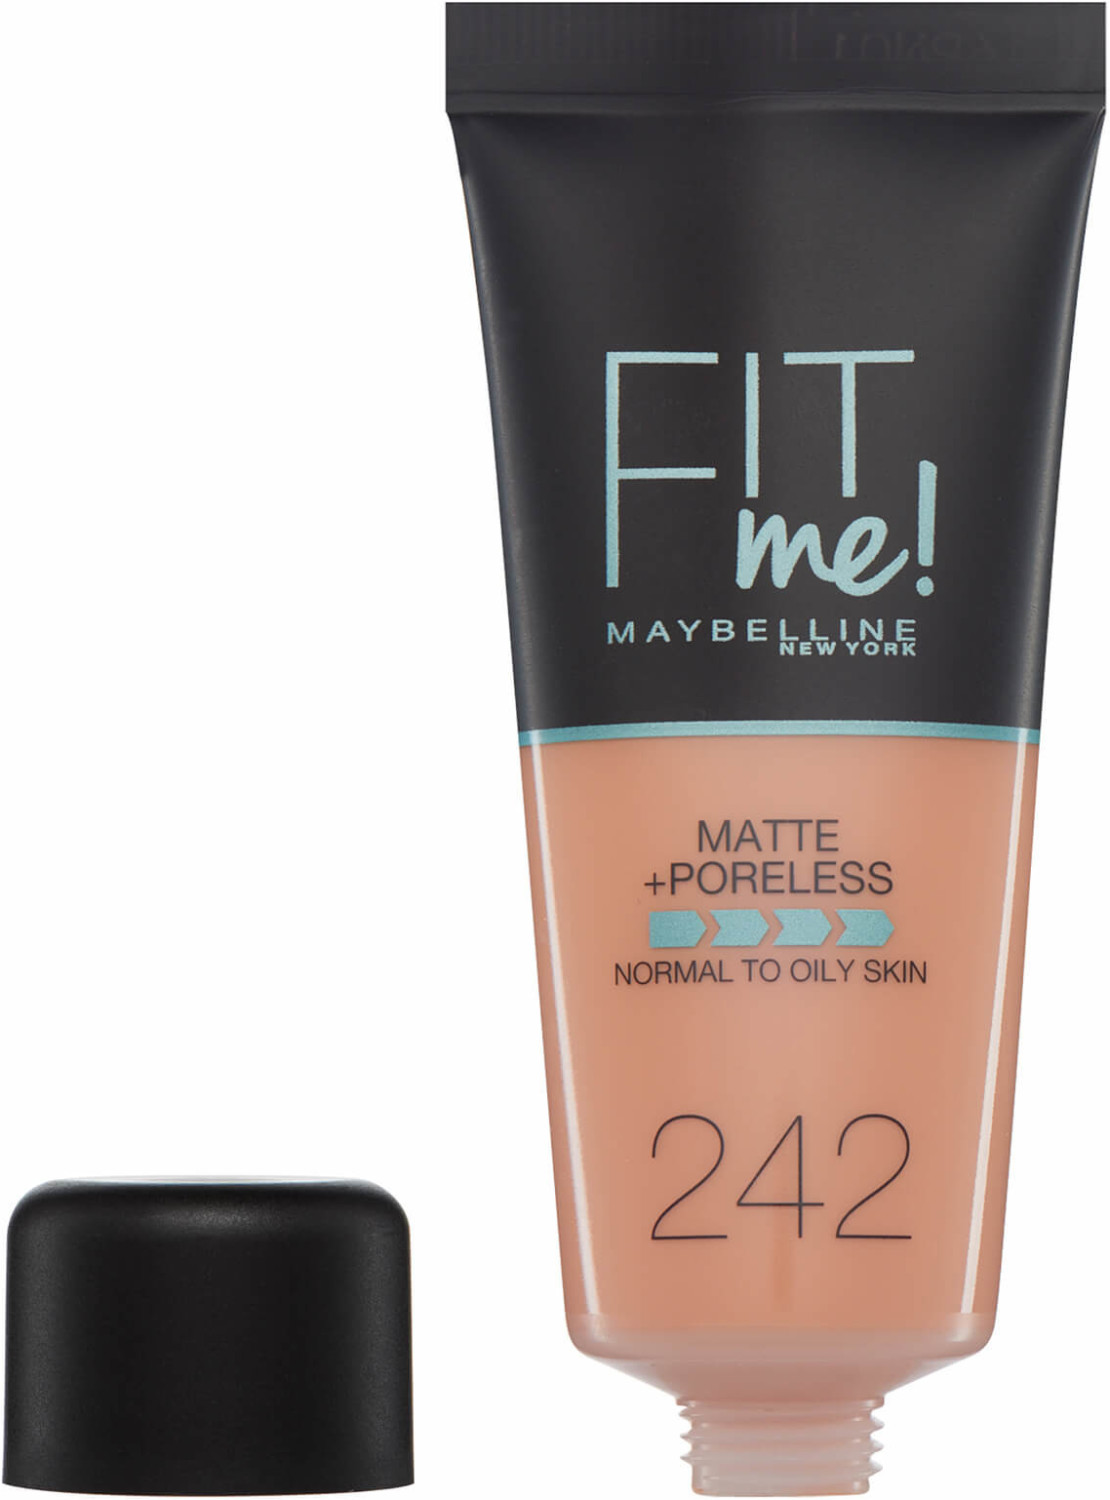 Maybelline Fit me! Matte + Poreless Make-up (30ml) 242 Light Honey desde  7,00 €